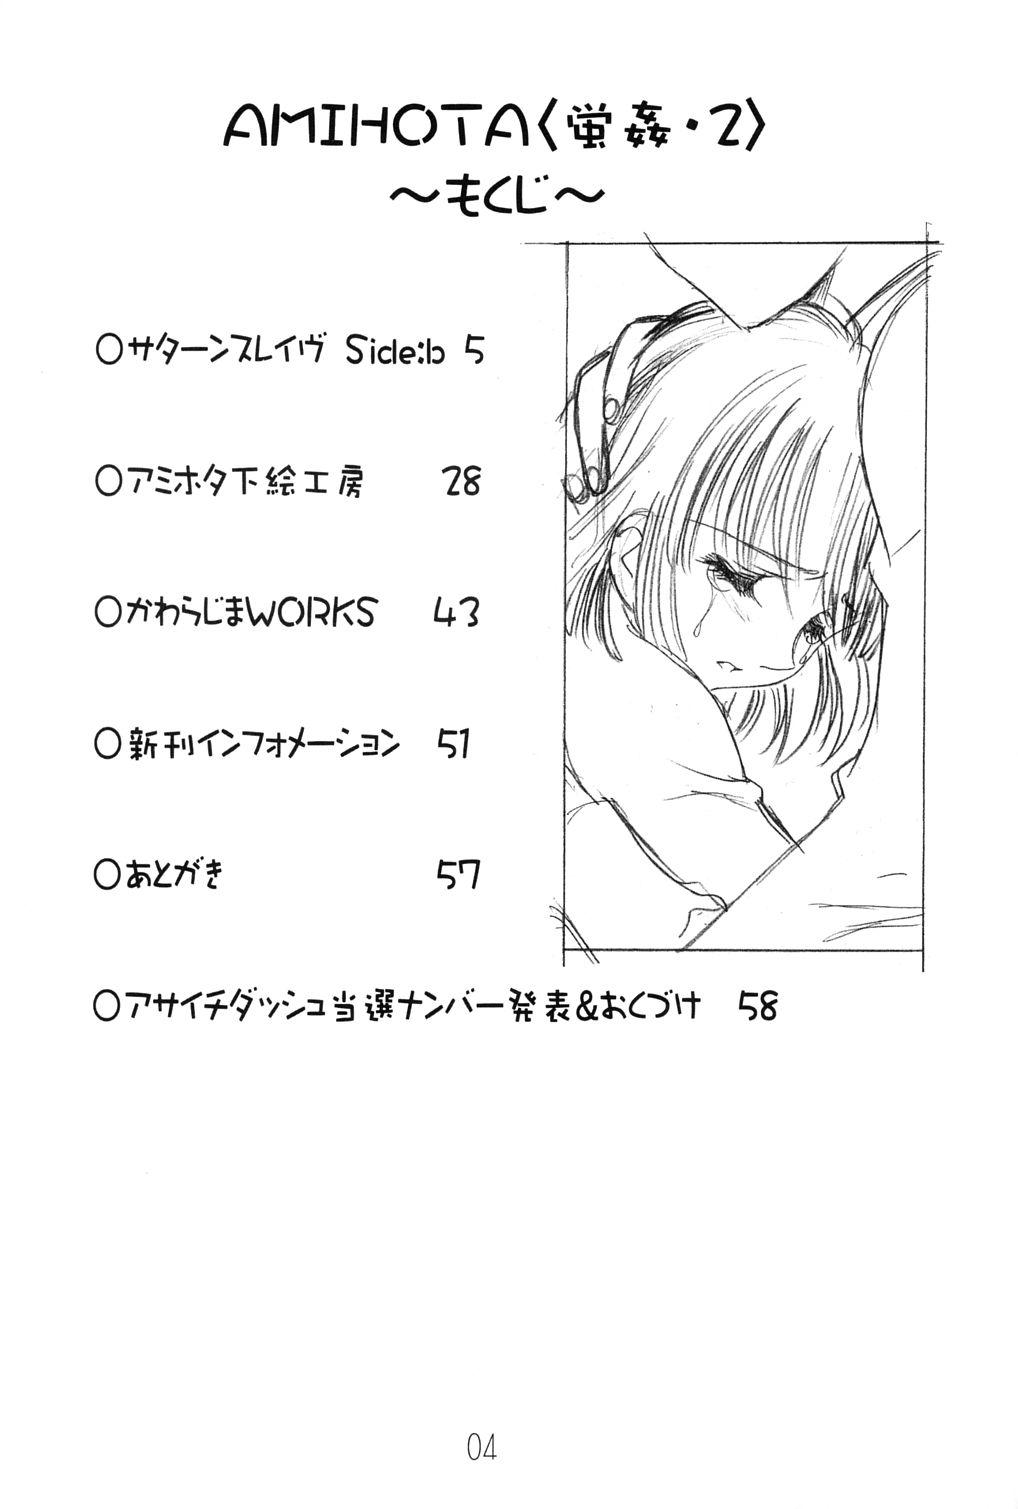 Oldyoung Amihota!! Side:b - Sailor moon HD - Page 3